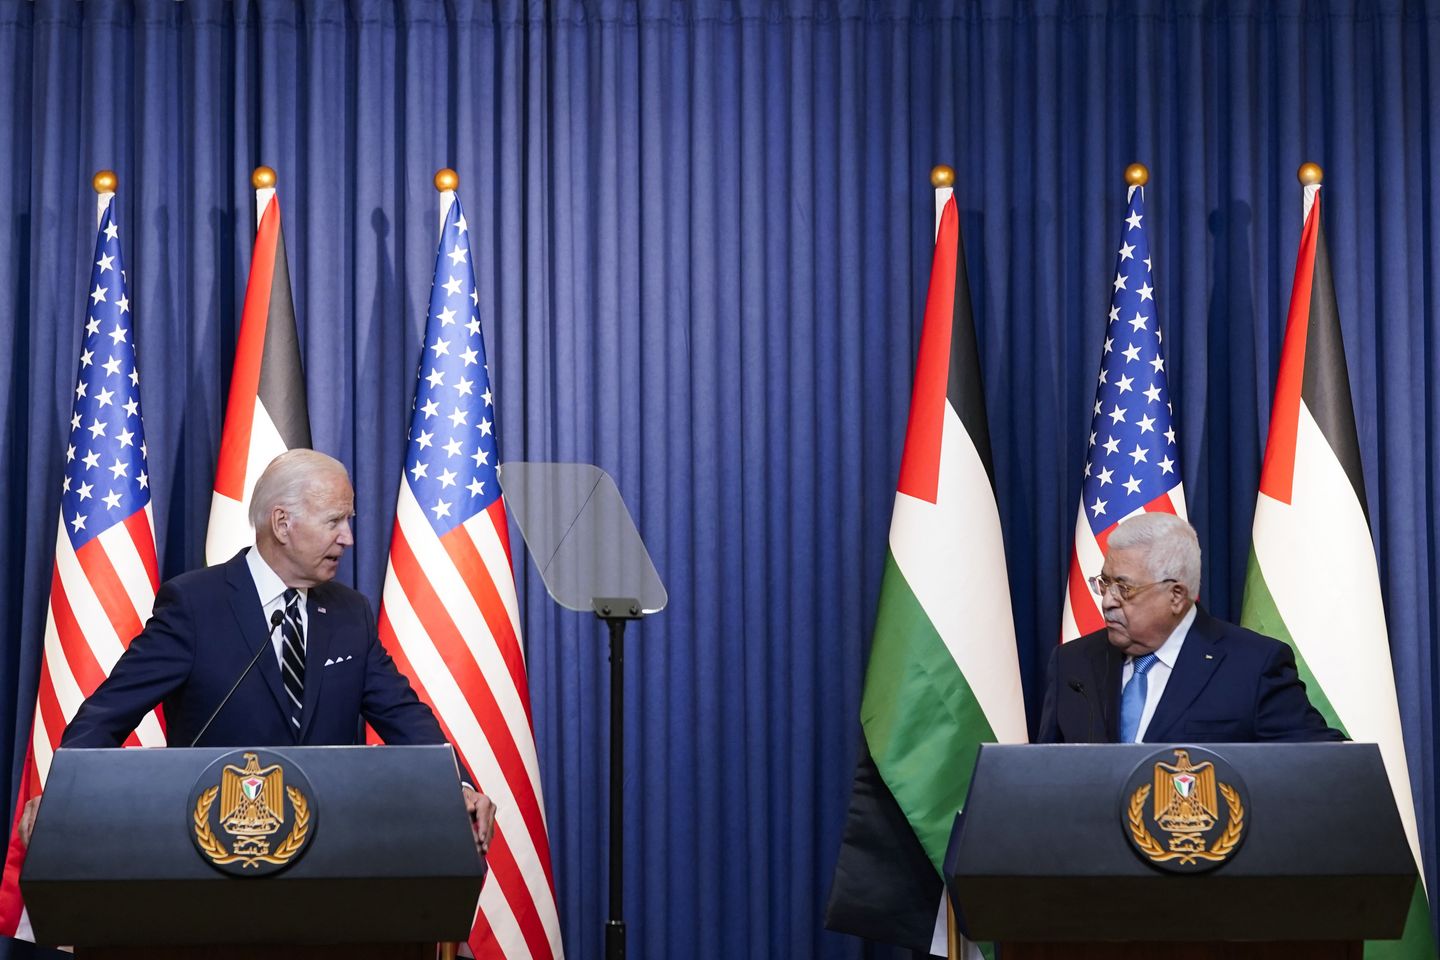 Biden announces $100M in U.S. aid for Palestinian hospitals, restoring aid cut under Trump